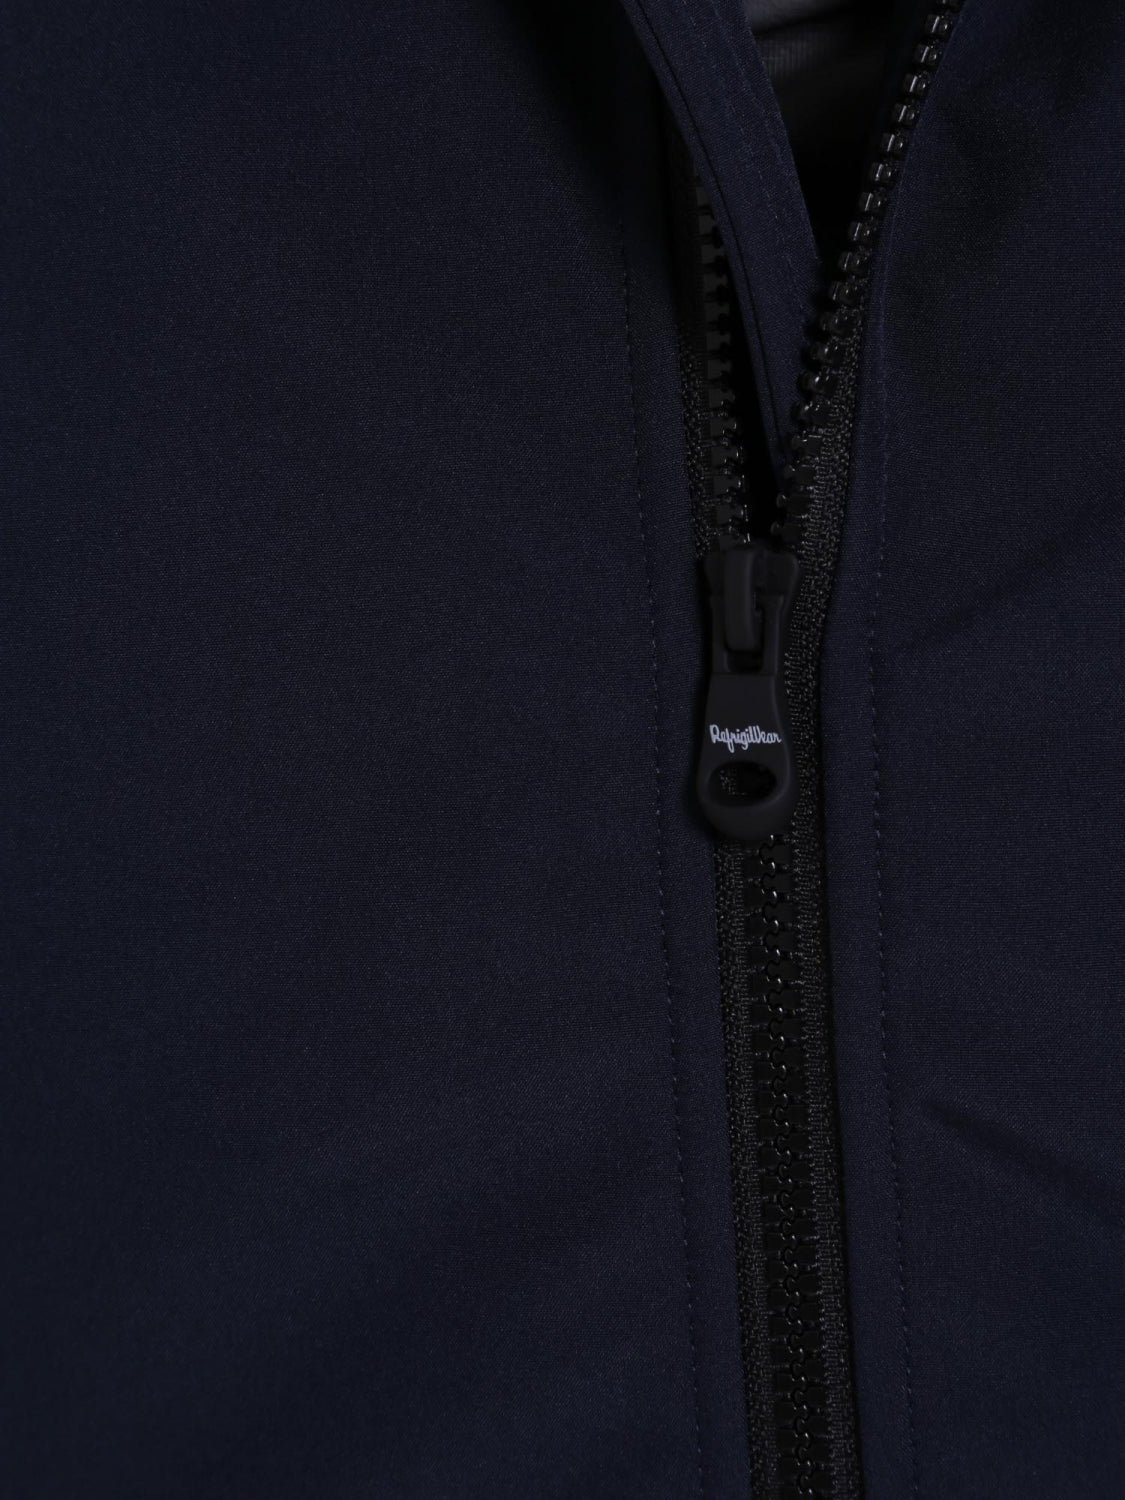 Refrigiwear Blue Polyester Jacket - Fizigo